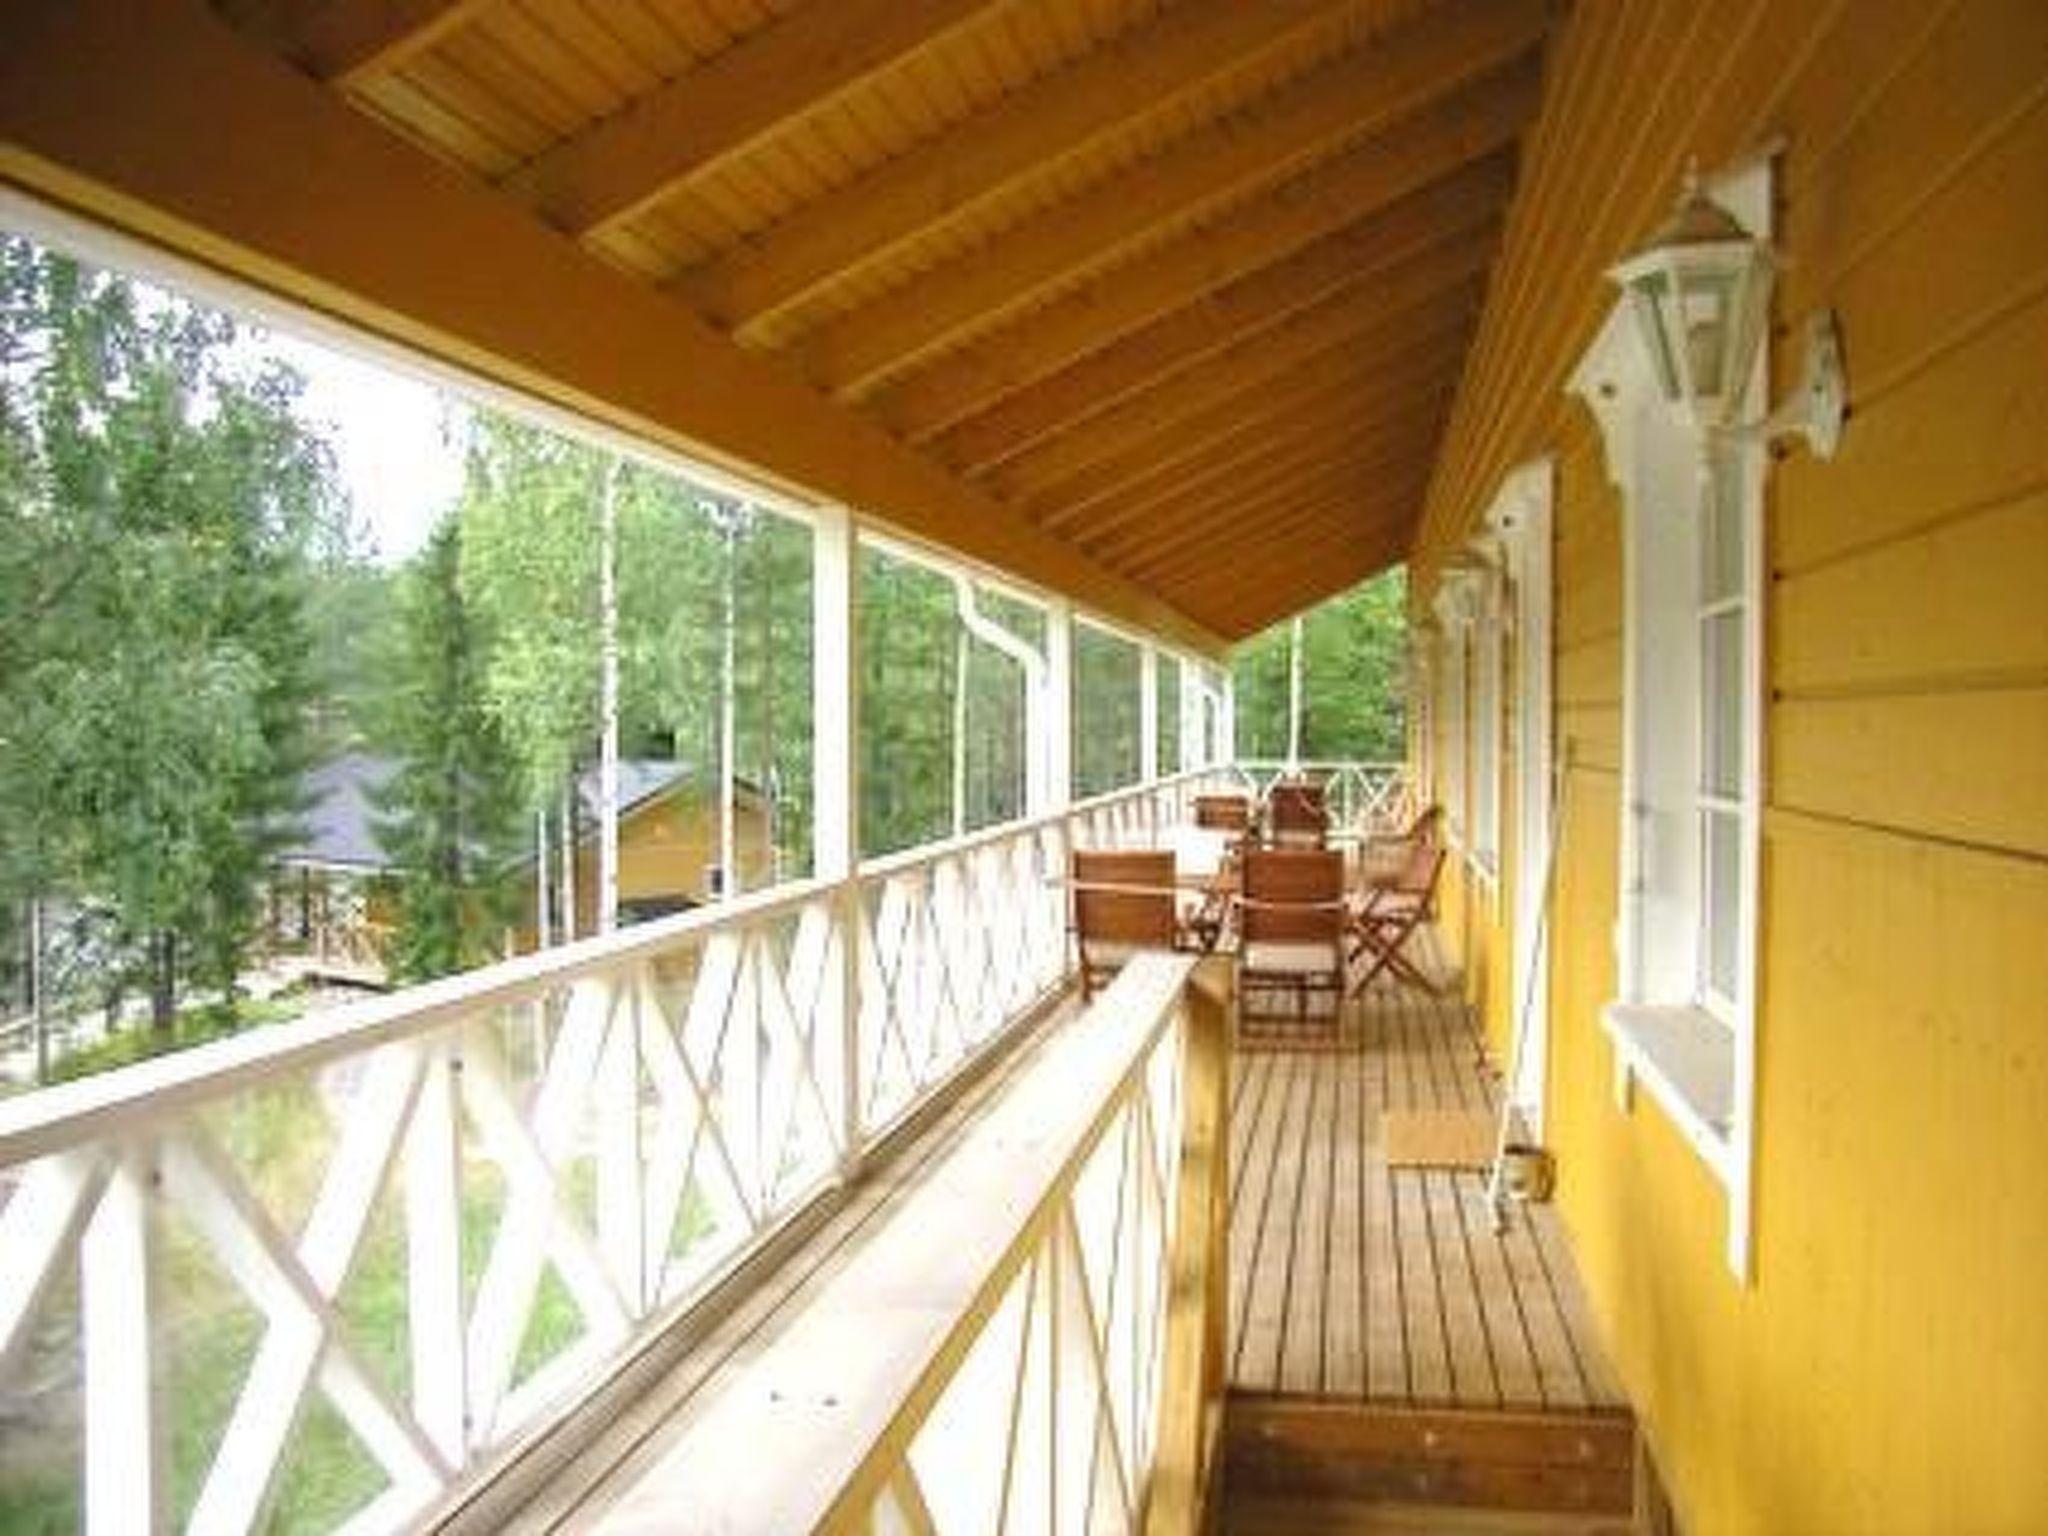 Photo 6 - 7 bedroom House in Kuopio with sauna